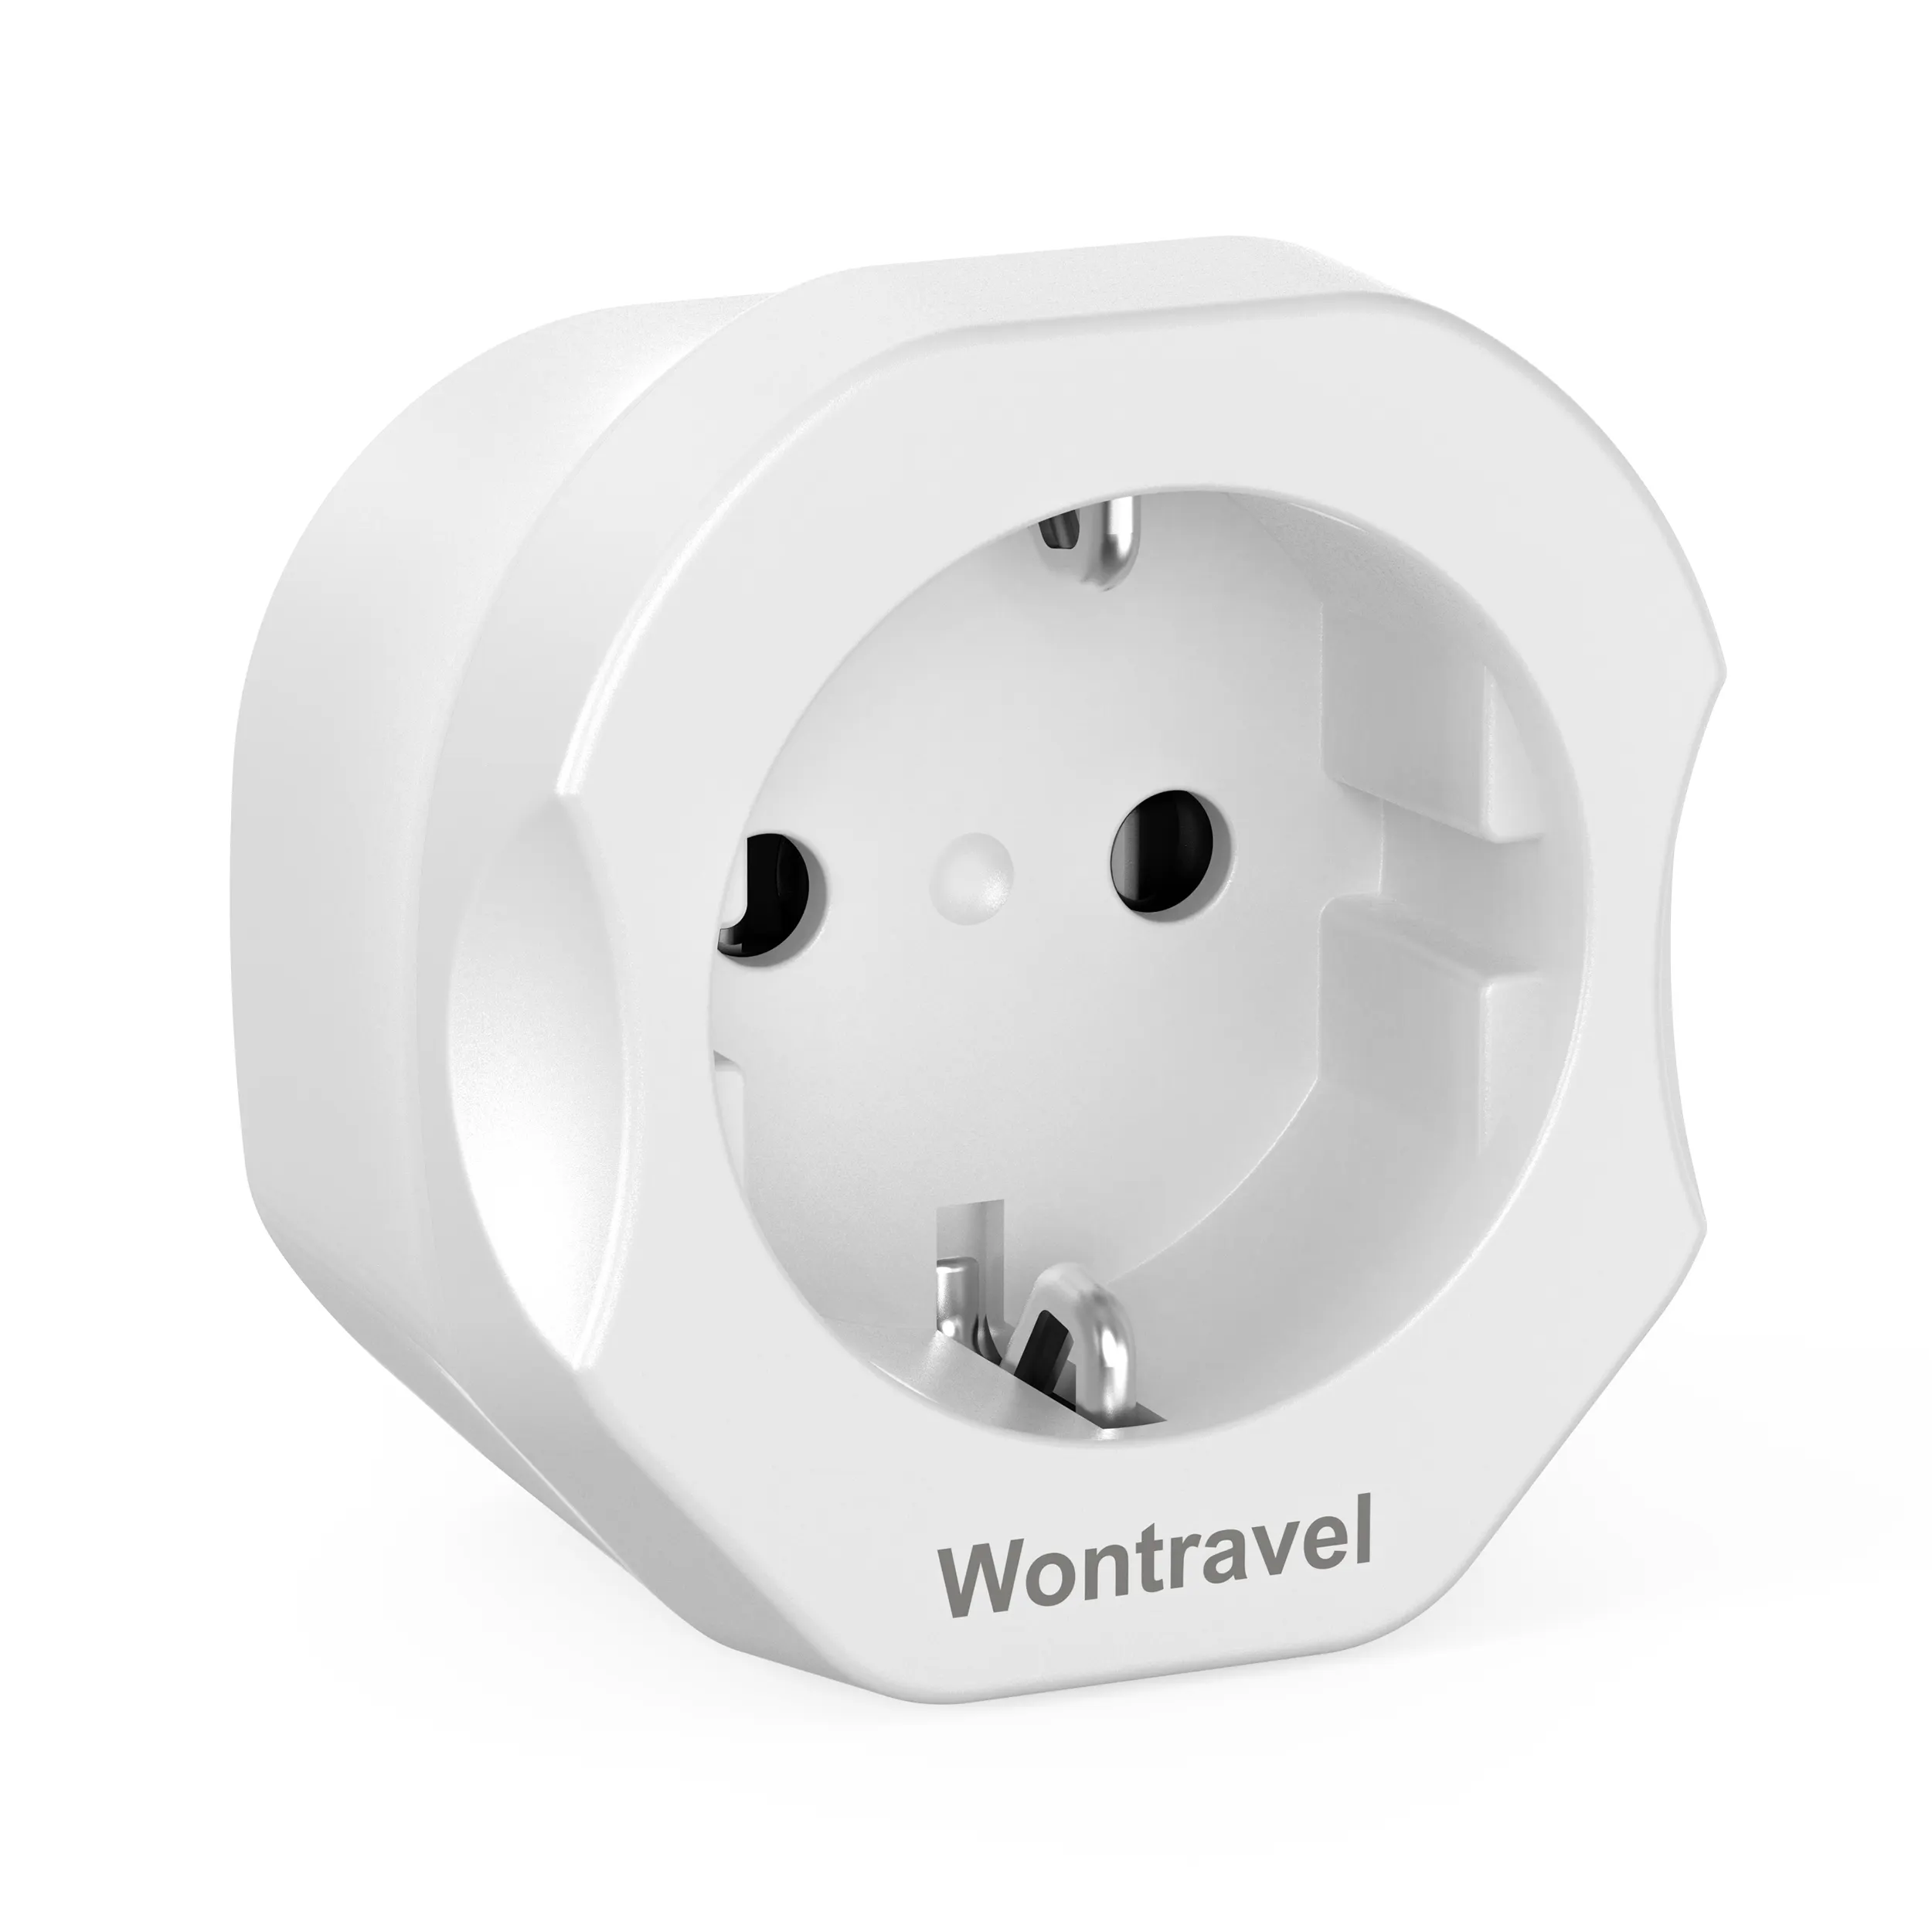 Wontravel Mini adaptateur d'alimentation universel Portable World Travel Plug Outlet Euro vers UK Plug Adapter